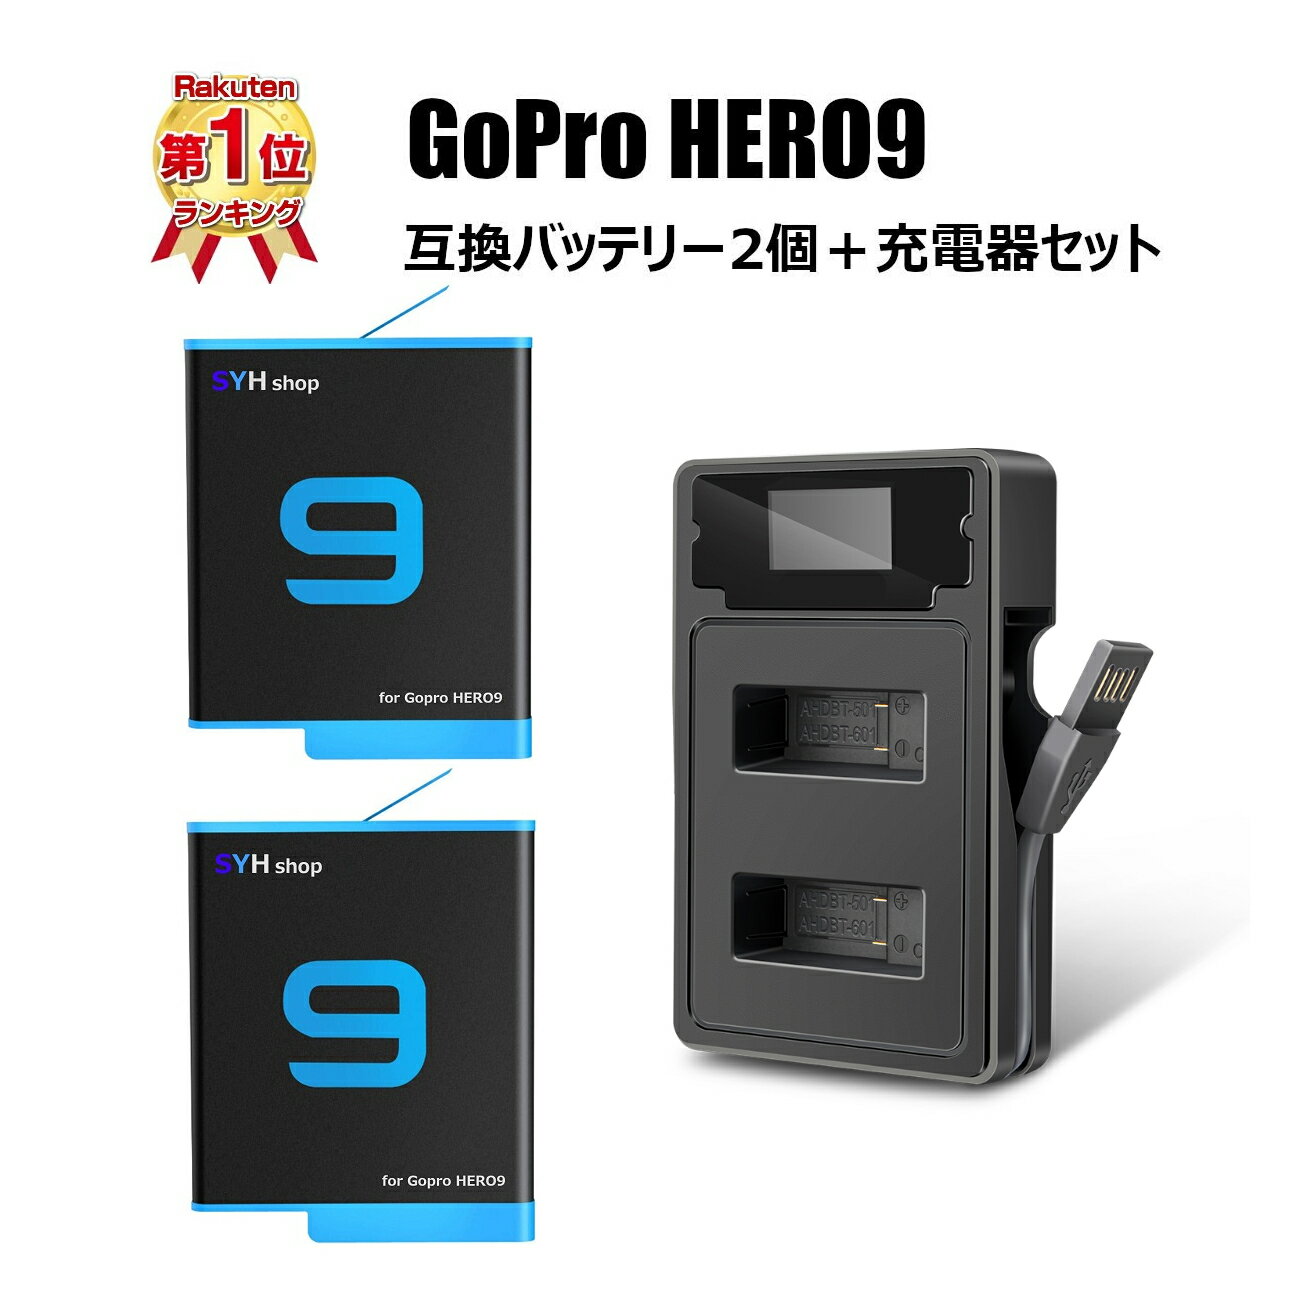    365 GoPro HERO9 black p SYH SHOPIWi݊obe[2iیP[Xj{USBfAobe[[d@GoPro HERO9 ANZT[ S-13